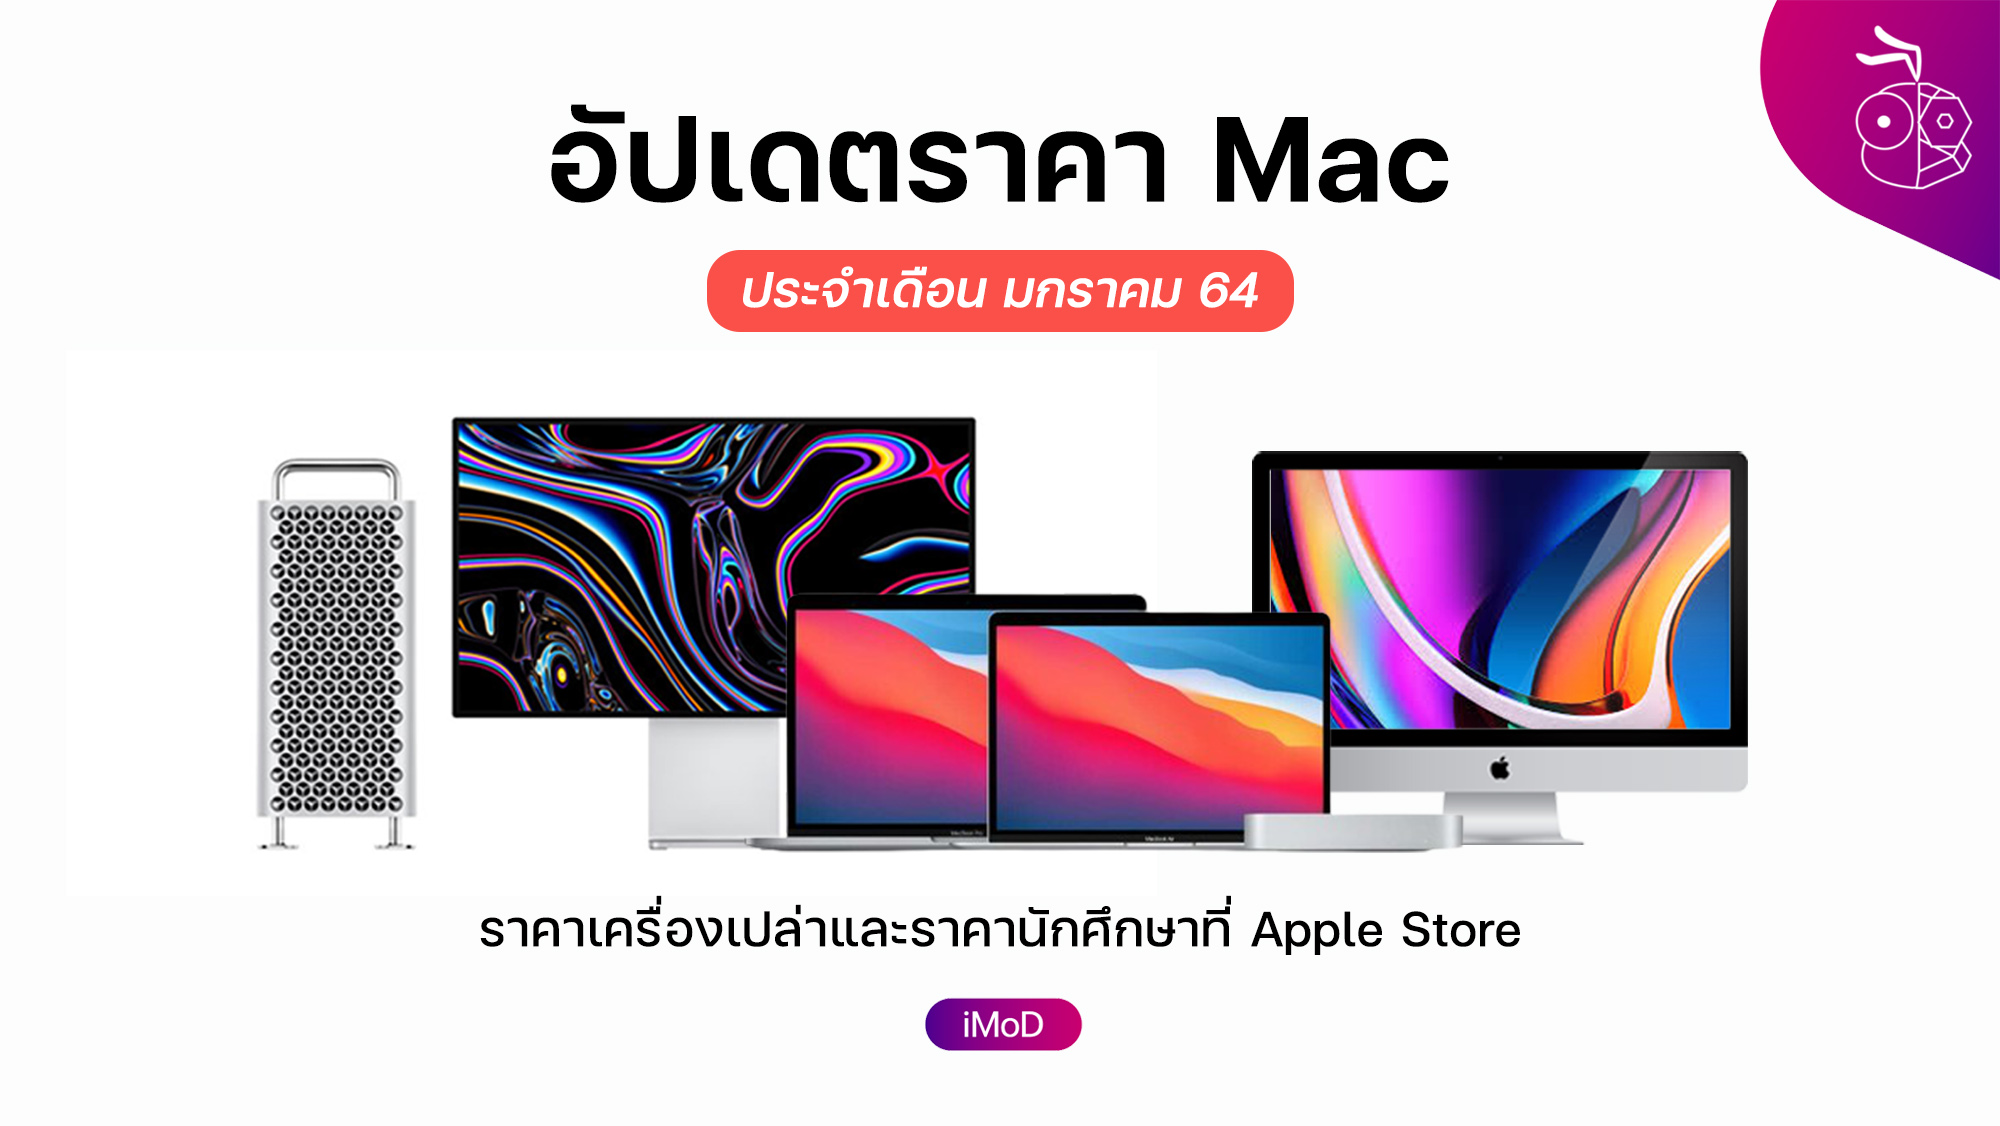 macbook-pro-macbook-air-imac-imac-pro-mac-mini-mac-pro